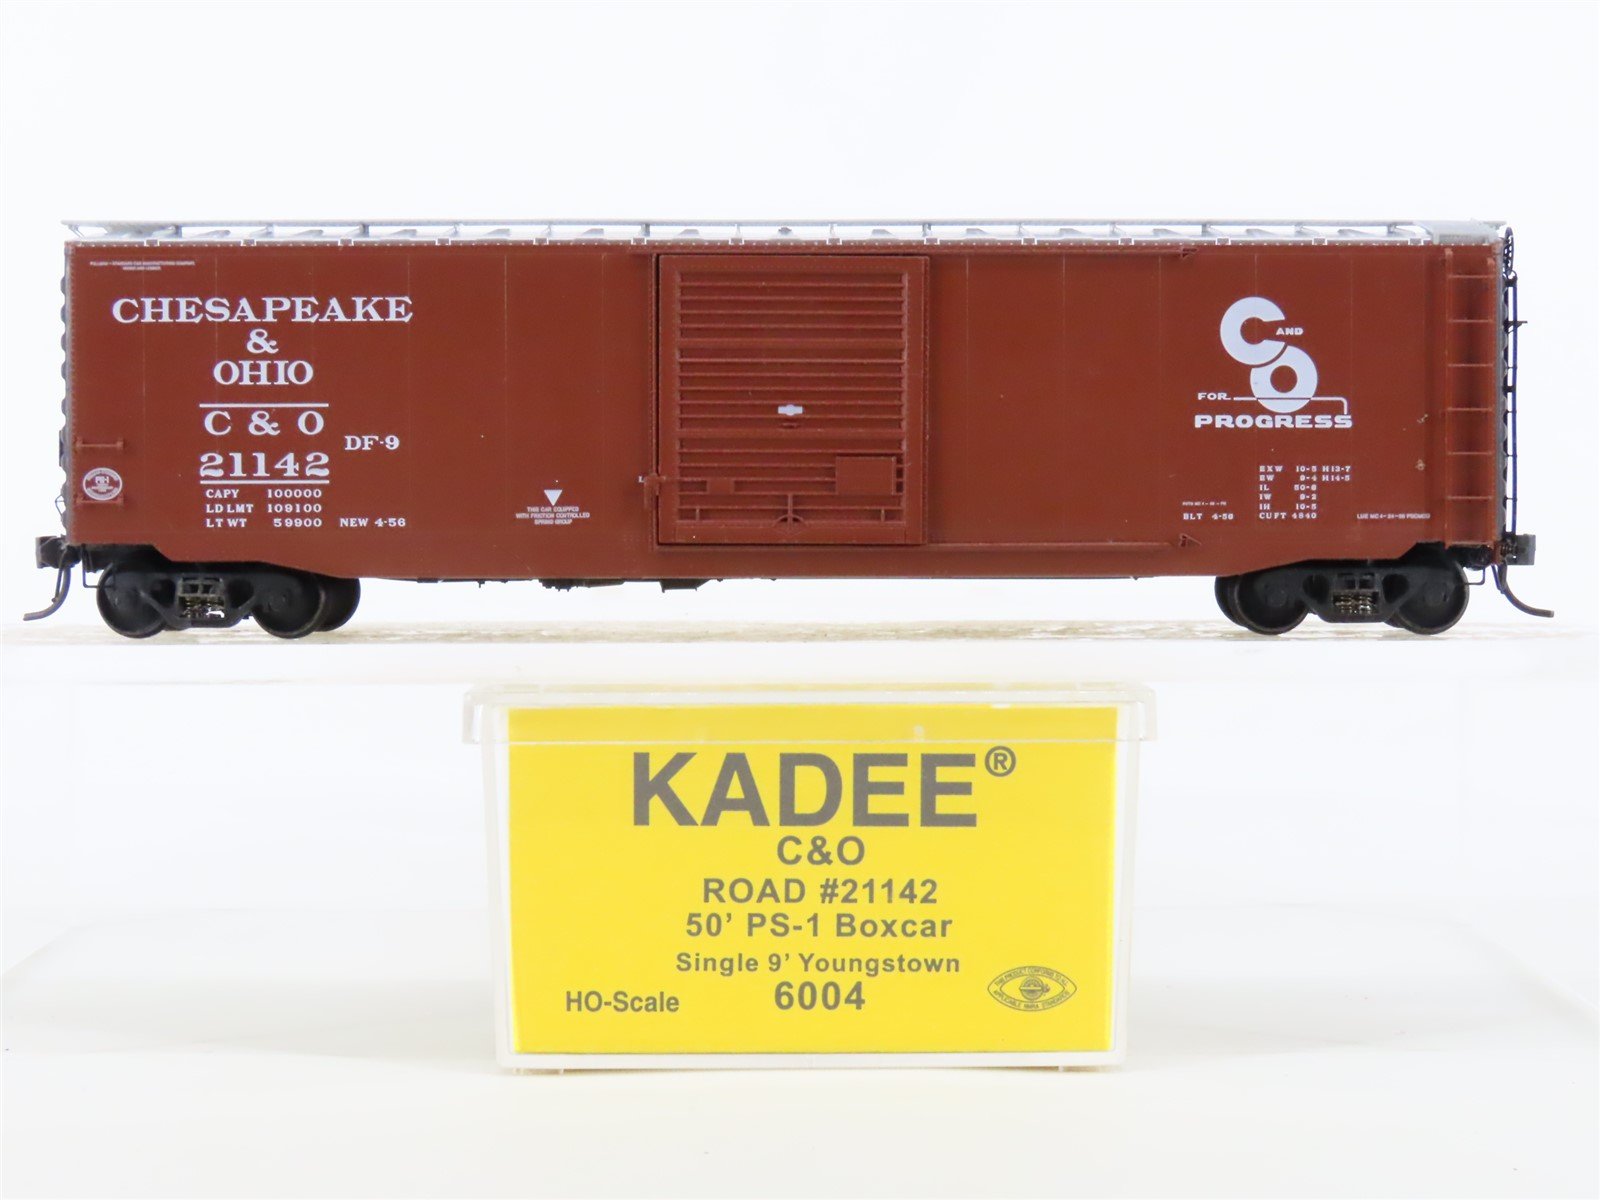 HO Scale Kadee 6004 C&O "For Progress" 50' Single Youngstown Door Box Car #21142